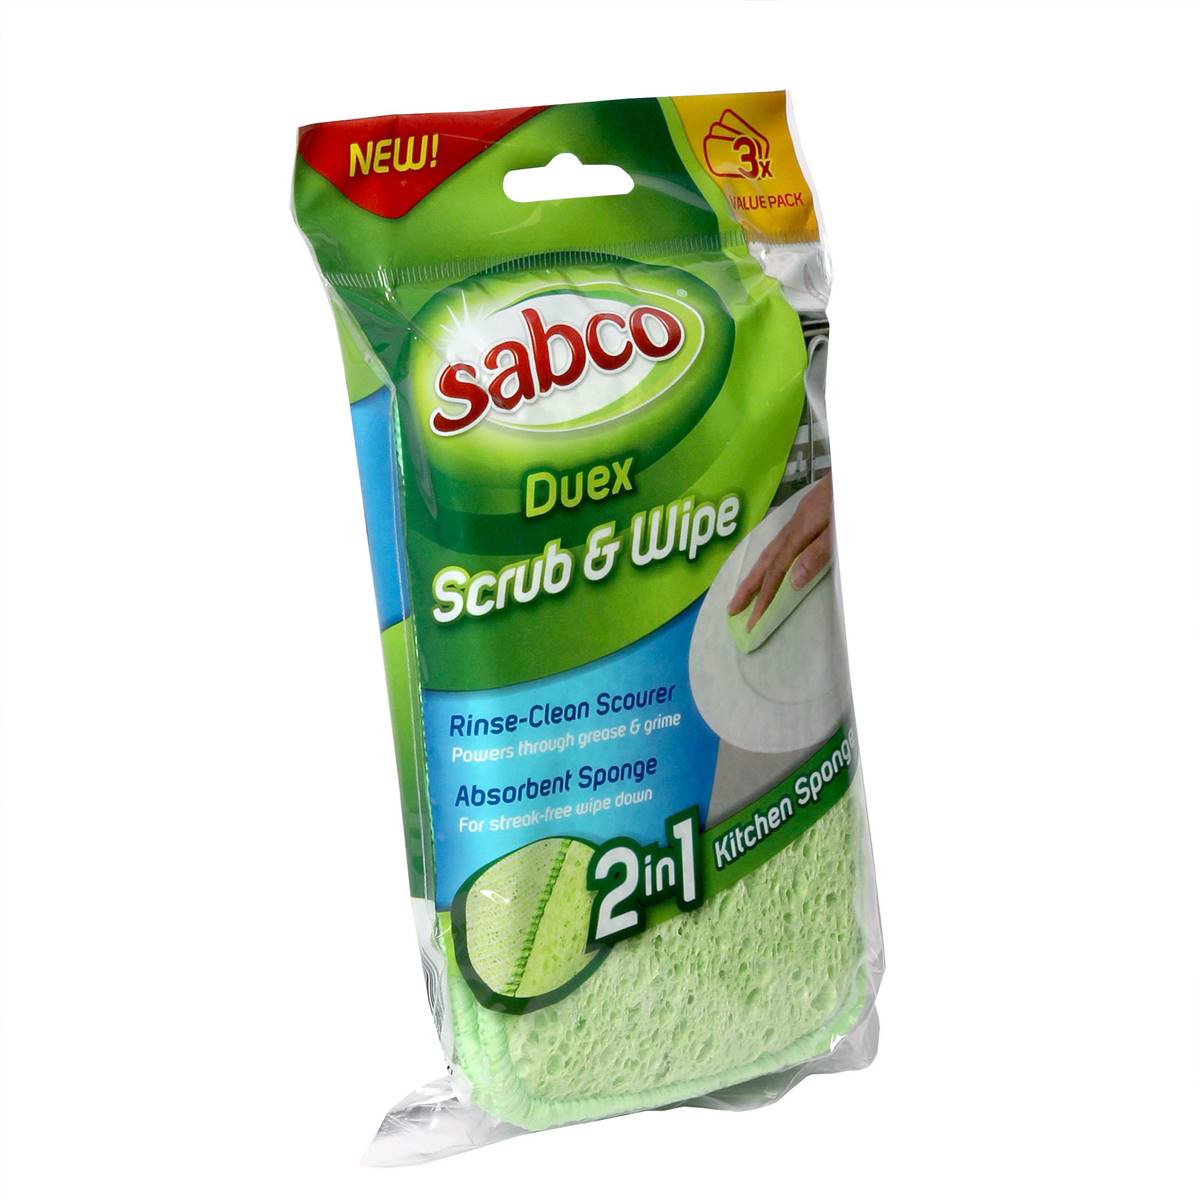 Sabco Duex Scrub & Wipe Kitchen Sponge 3 Pack